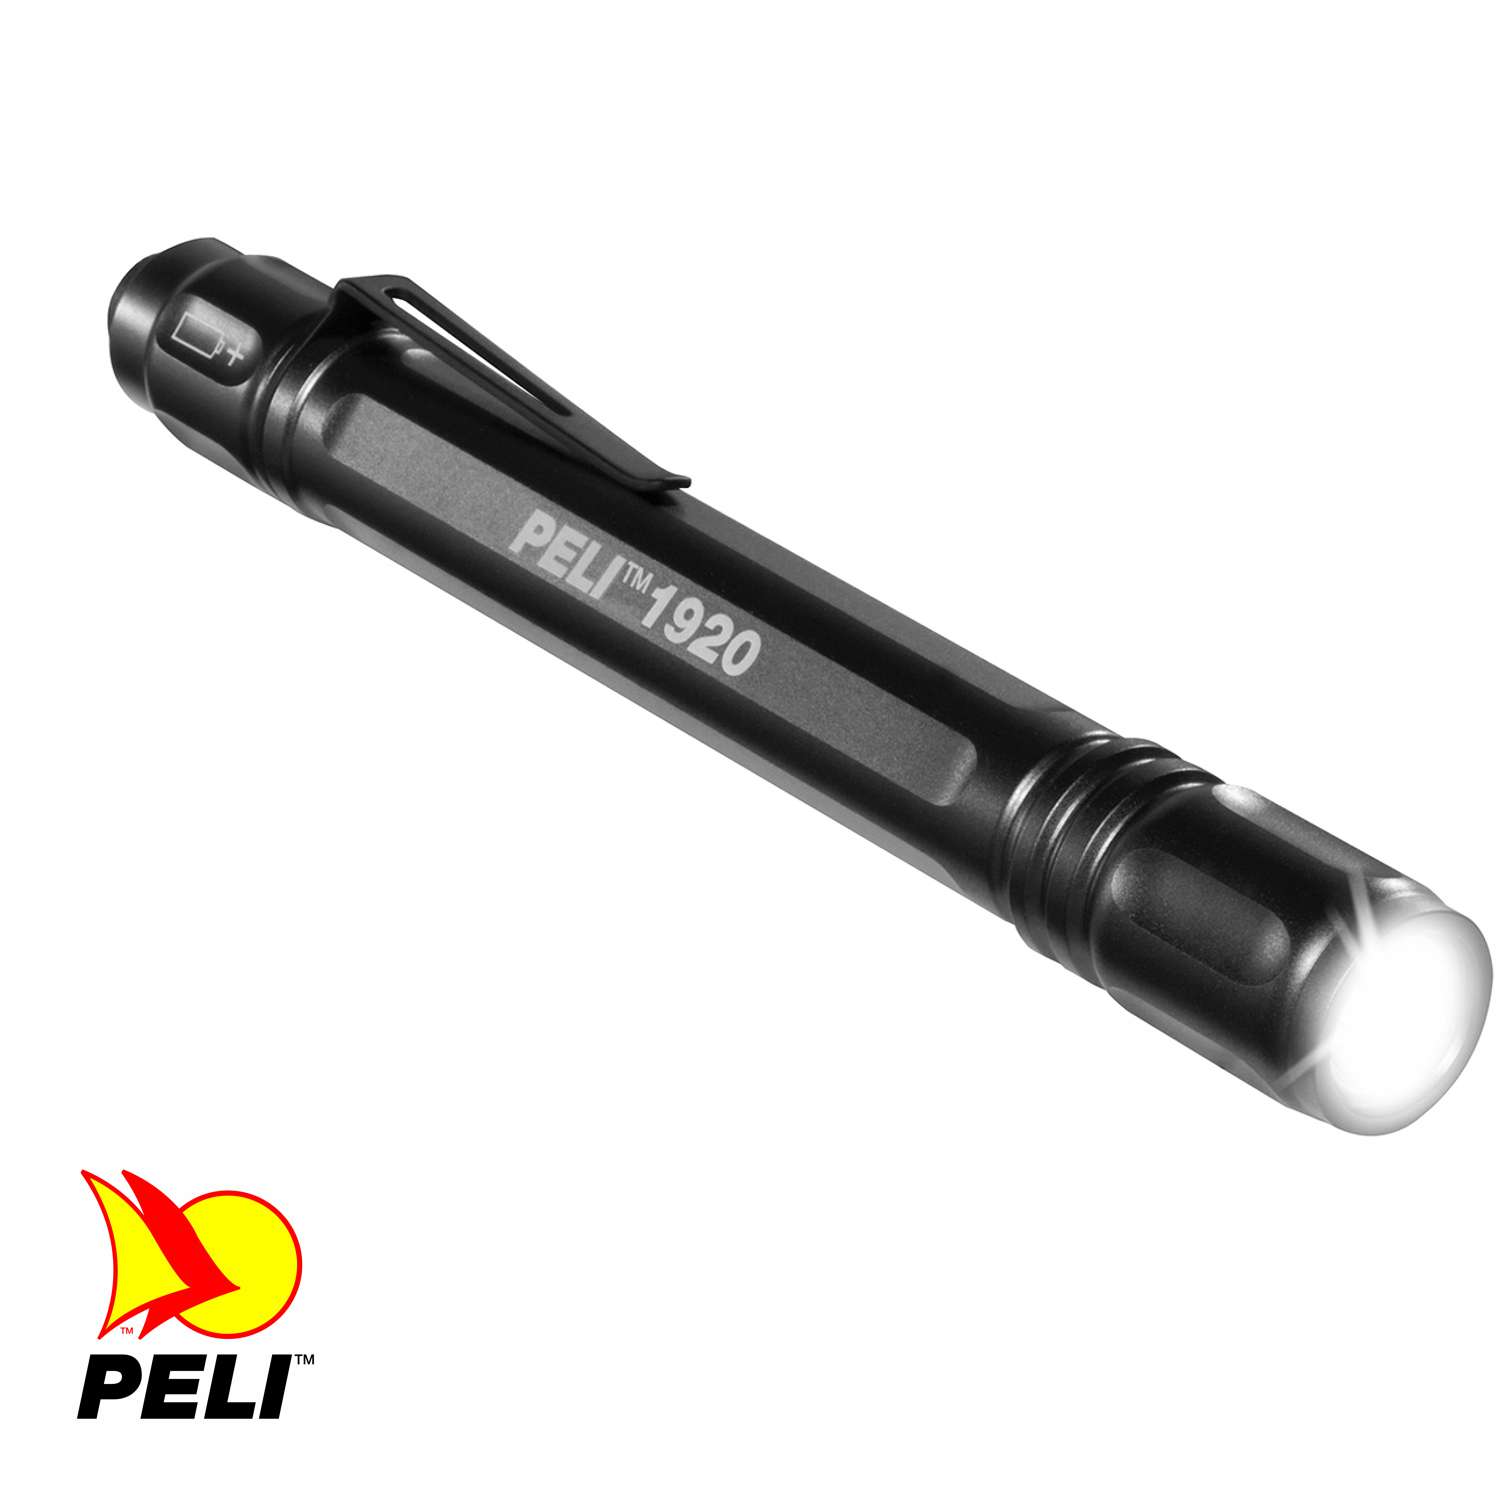 Peli™ 1920 LED-Taschenlampe schwarz, inkl. Batterien